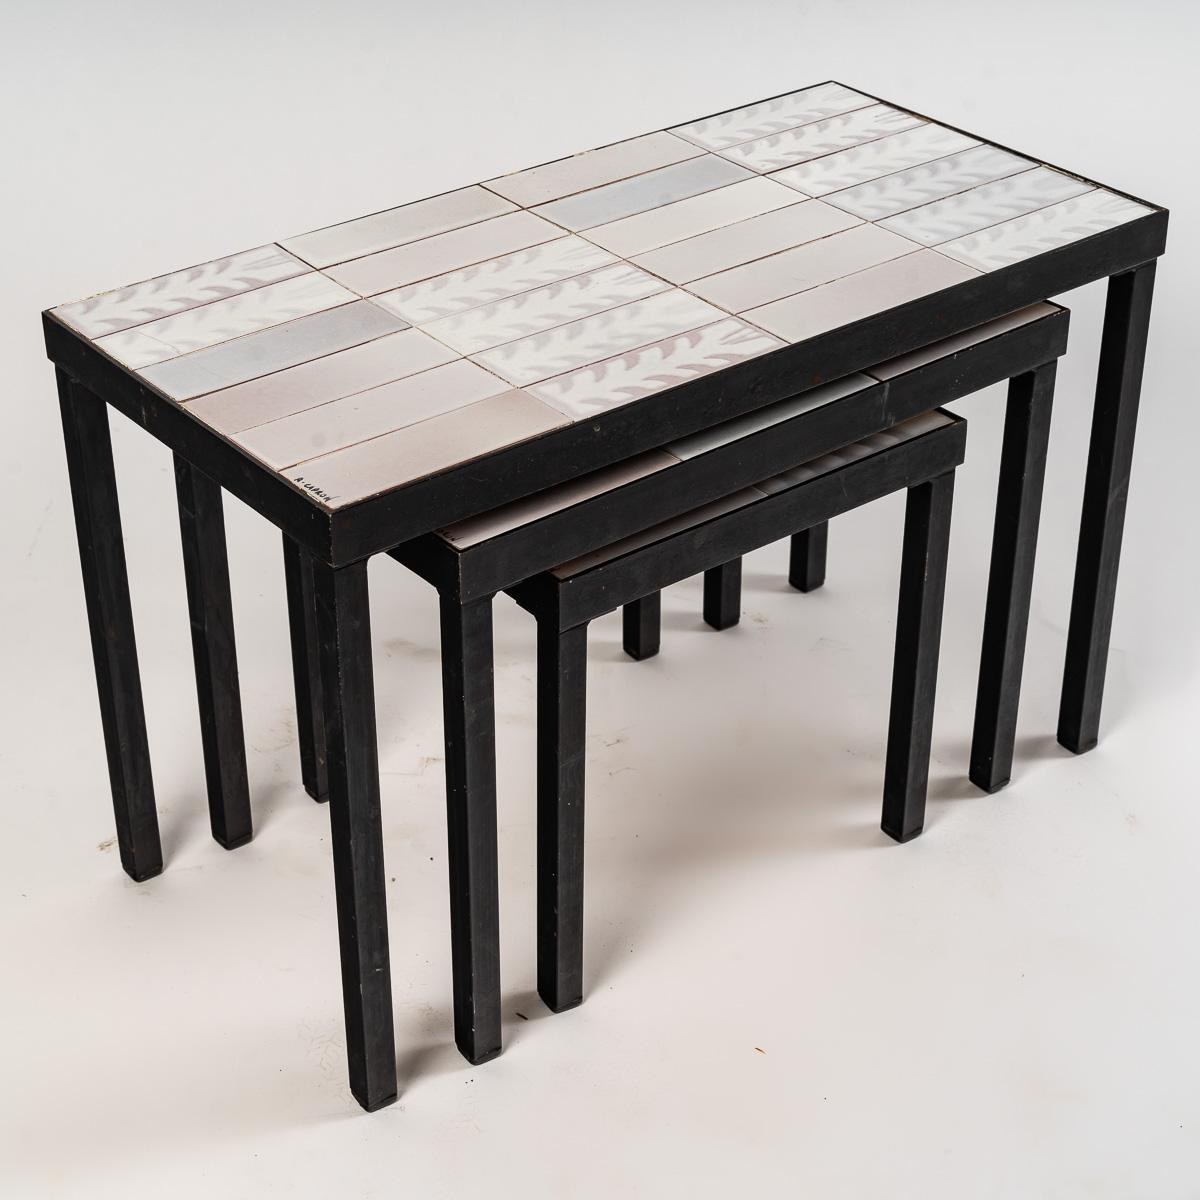 Table Gigognes of Roger Capron, Design of the 20th Century, White Ceramic 2